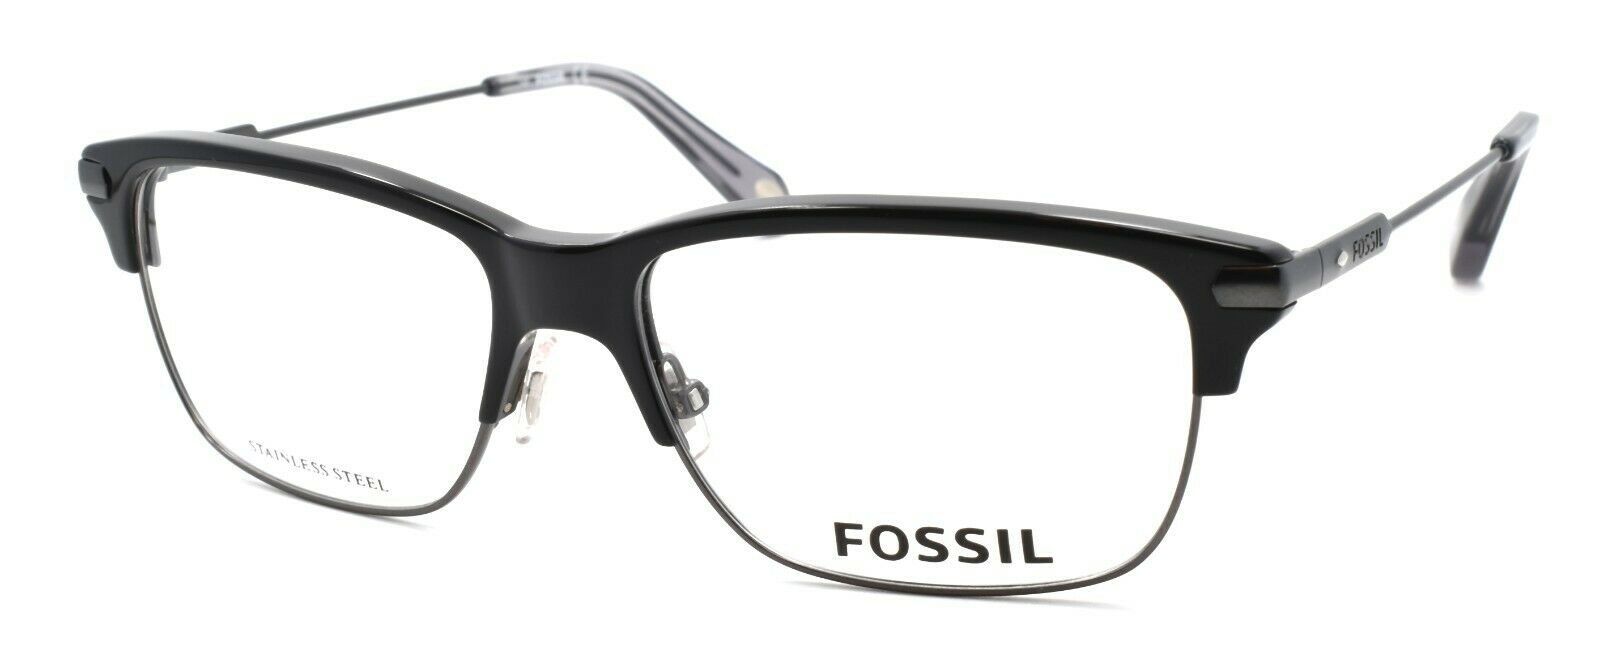 1-Fossil FOS 6056 OIP Men's Eyeglasses Frames 53-15-145 Ruthenium / Black + CASE-762753386274-IKSpecs